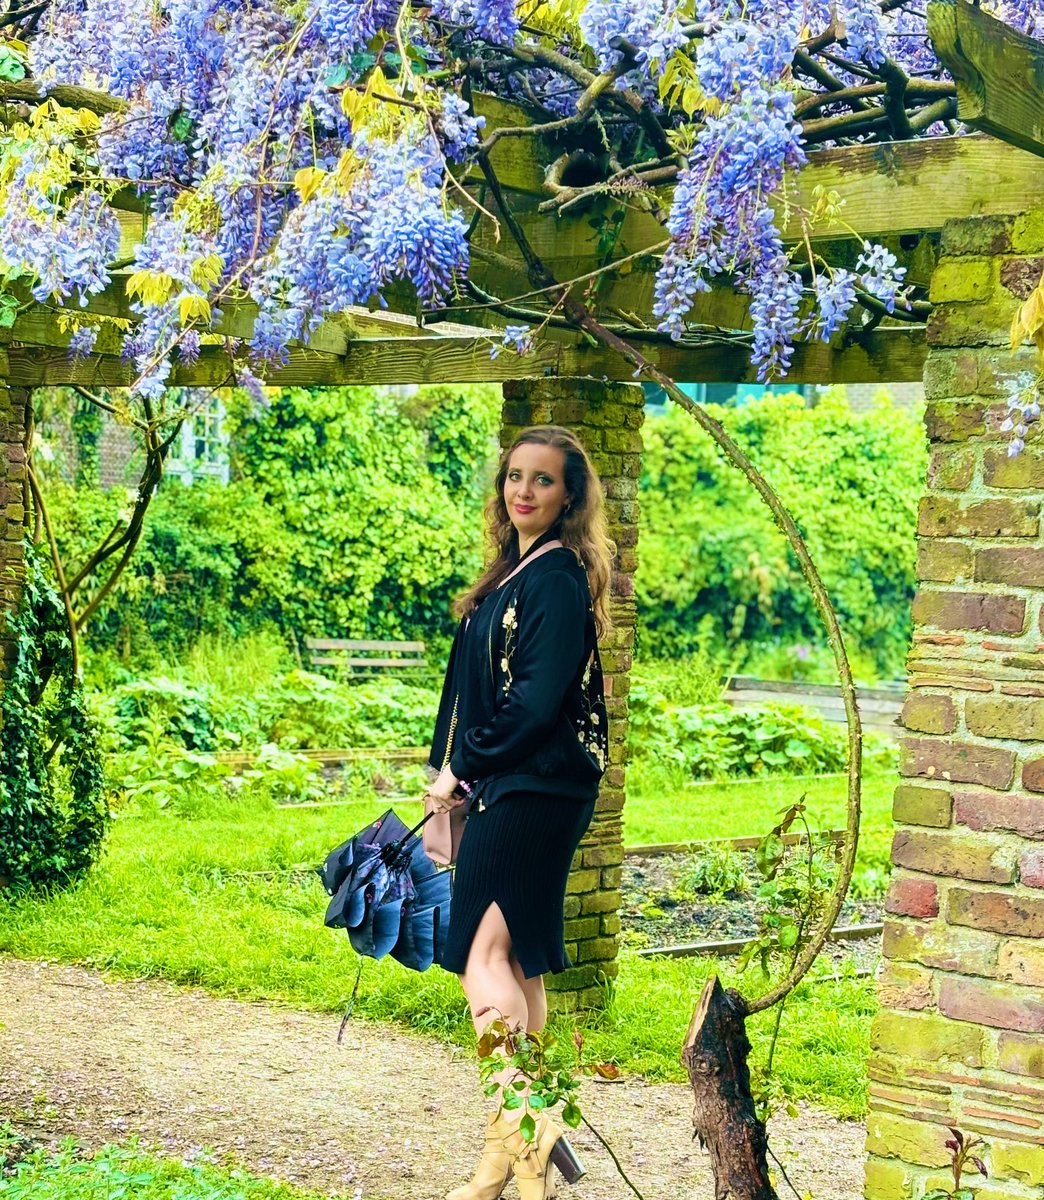 ~ Entering a wonder land of beautiful wisteria ~
💜💕💜
Nice park stroll today! ~🍃💛

~

#wisteria #wisteriaflowers #藤 #flowerpower #flowerlove #spring #nature #beauty #beautifulnature #photography #autisticadult #autisticwoman